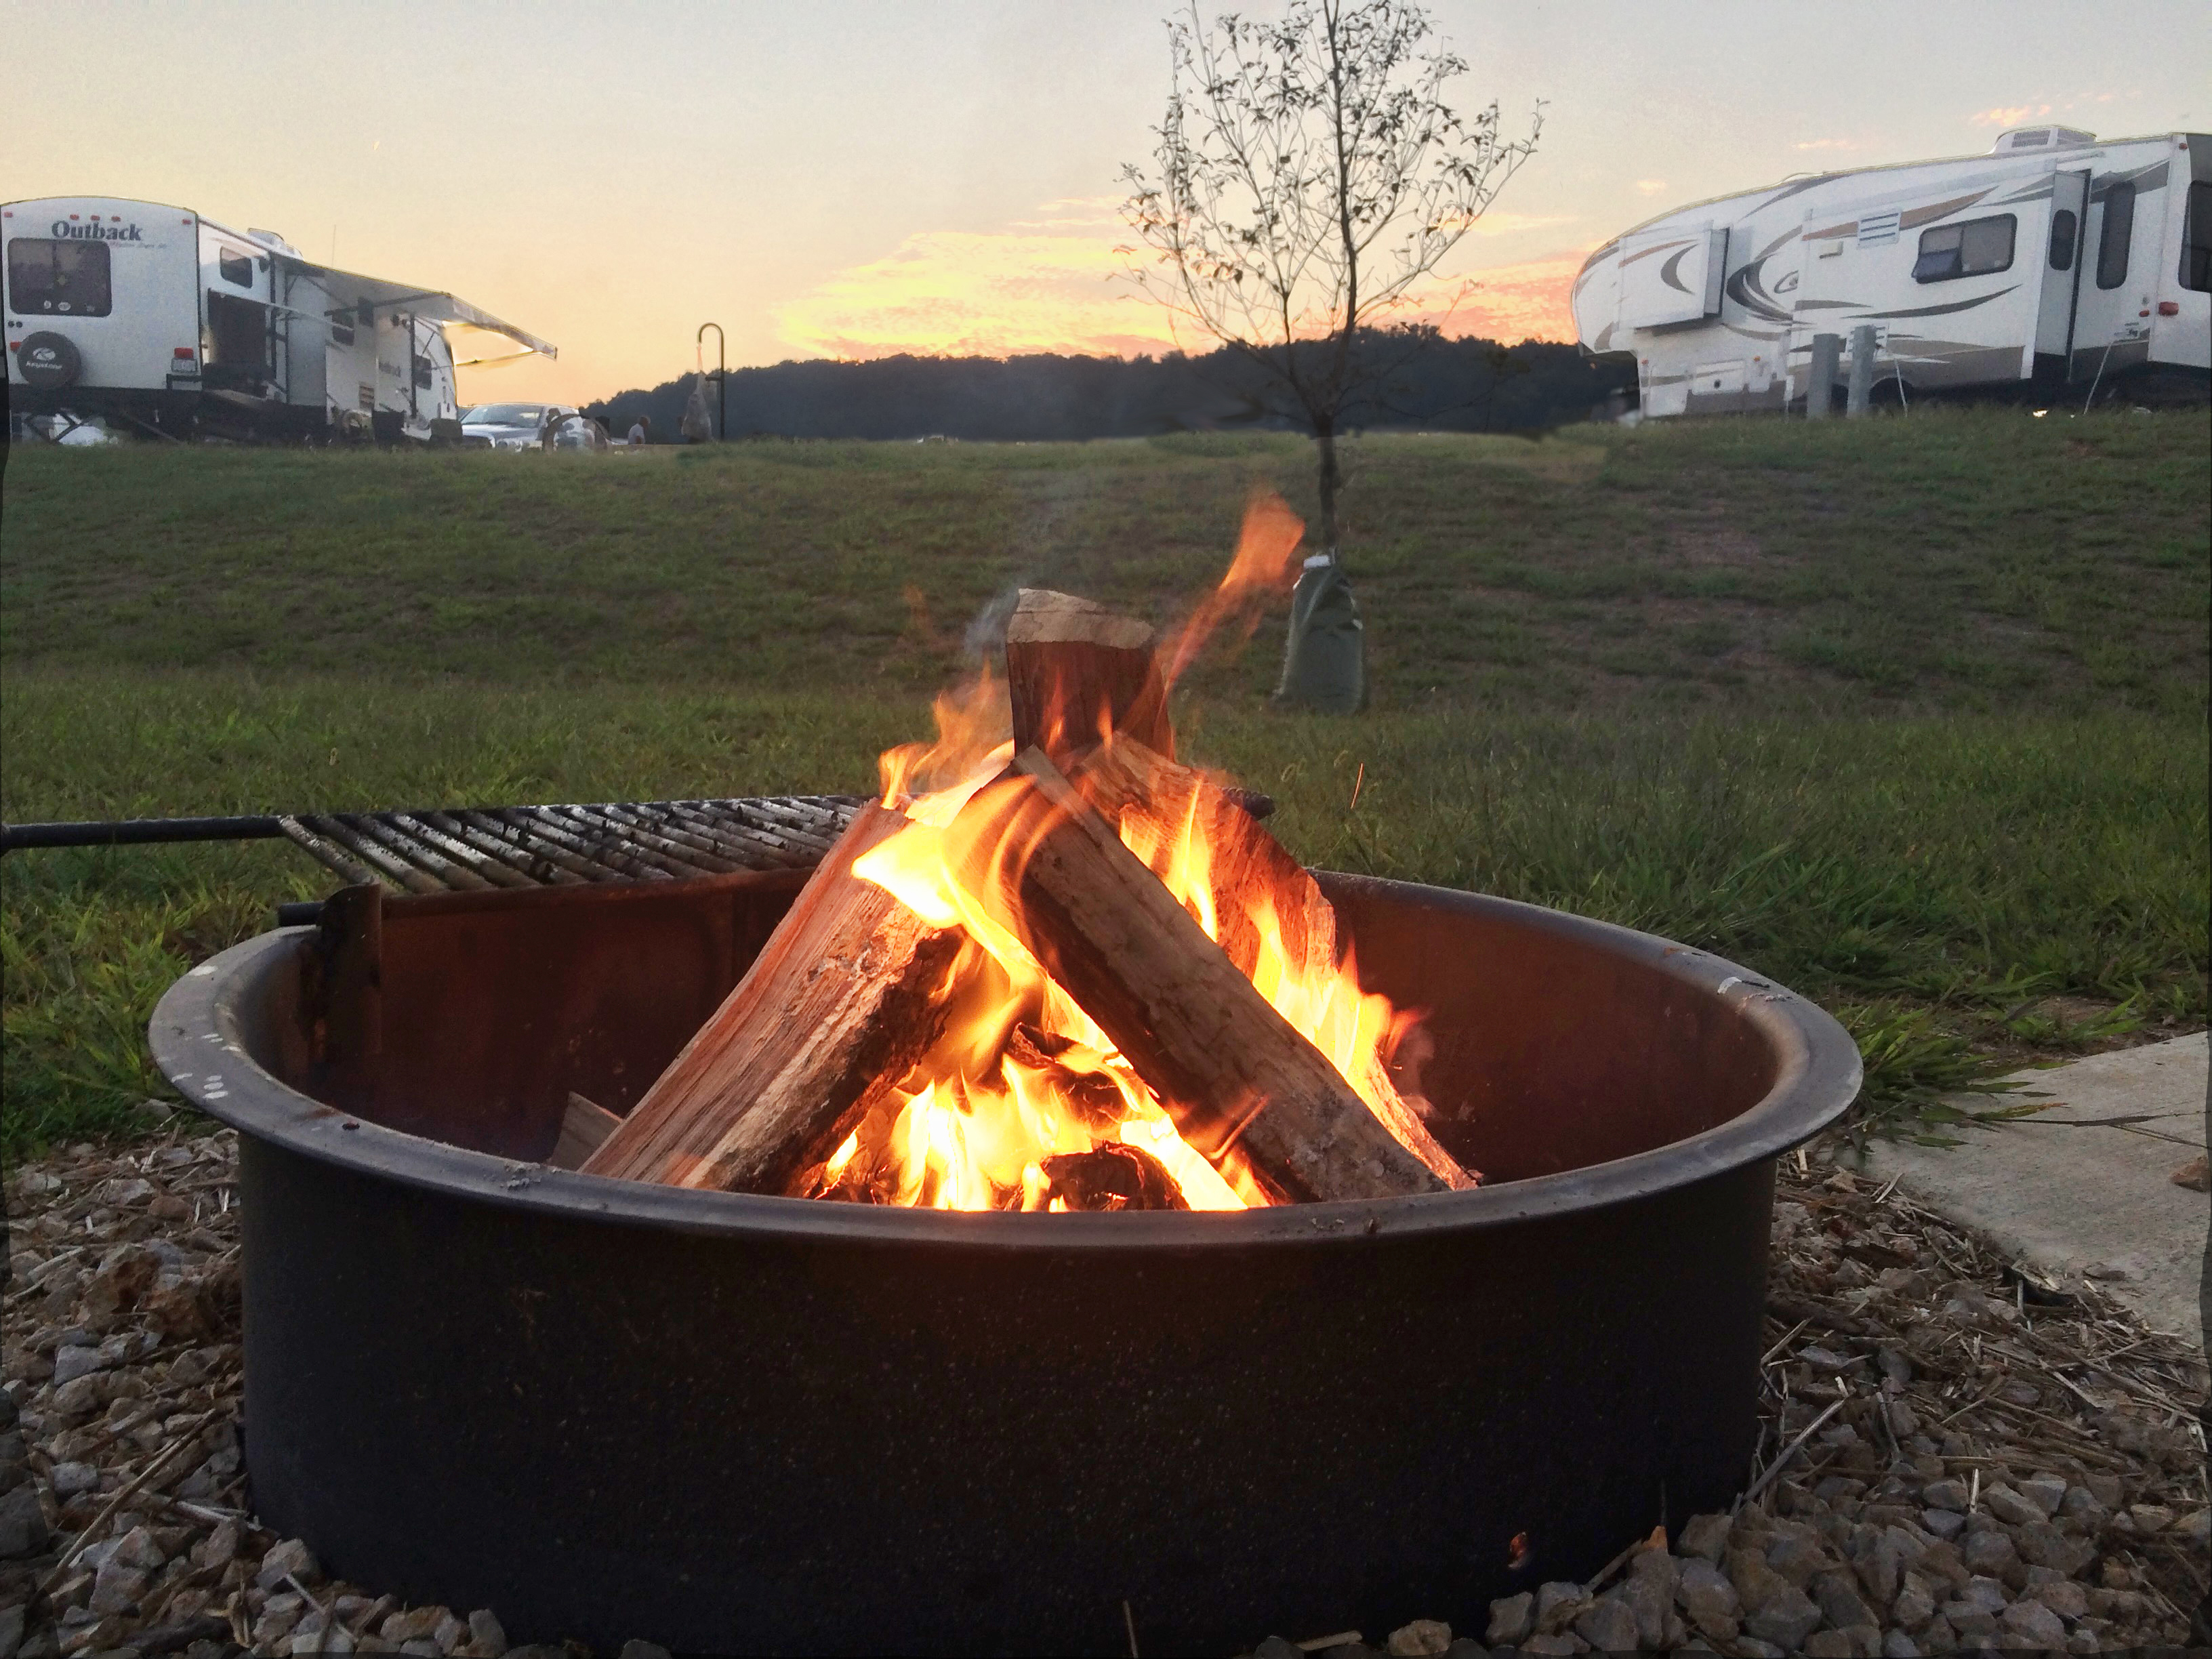 Campfire in an RV park